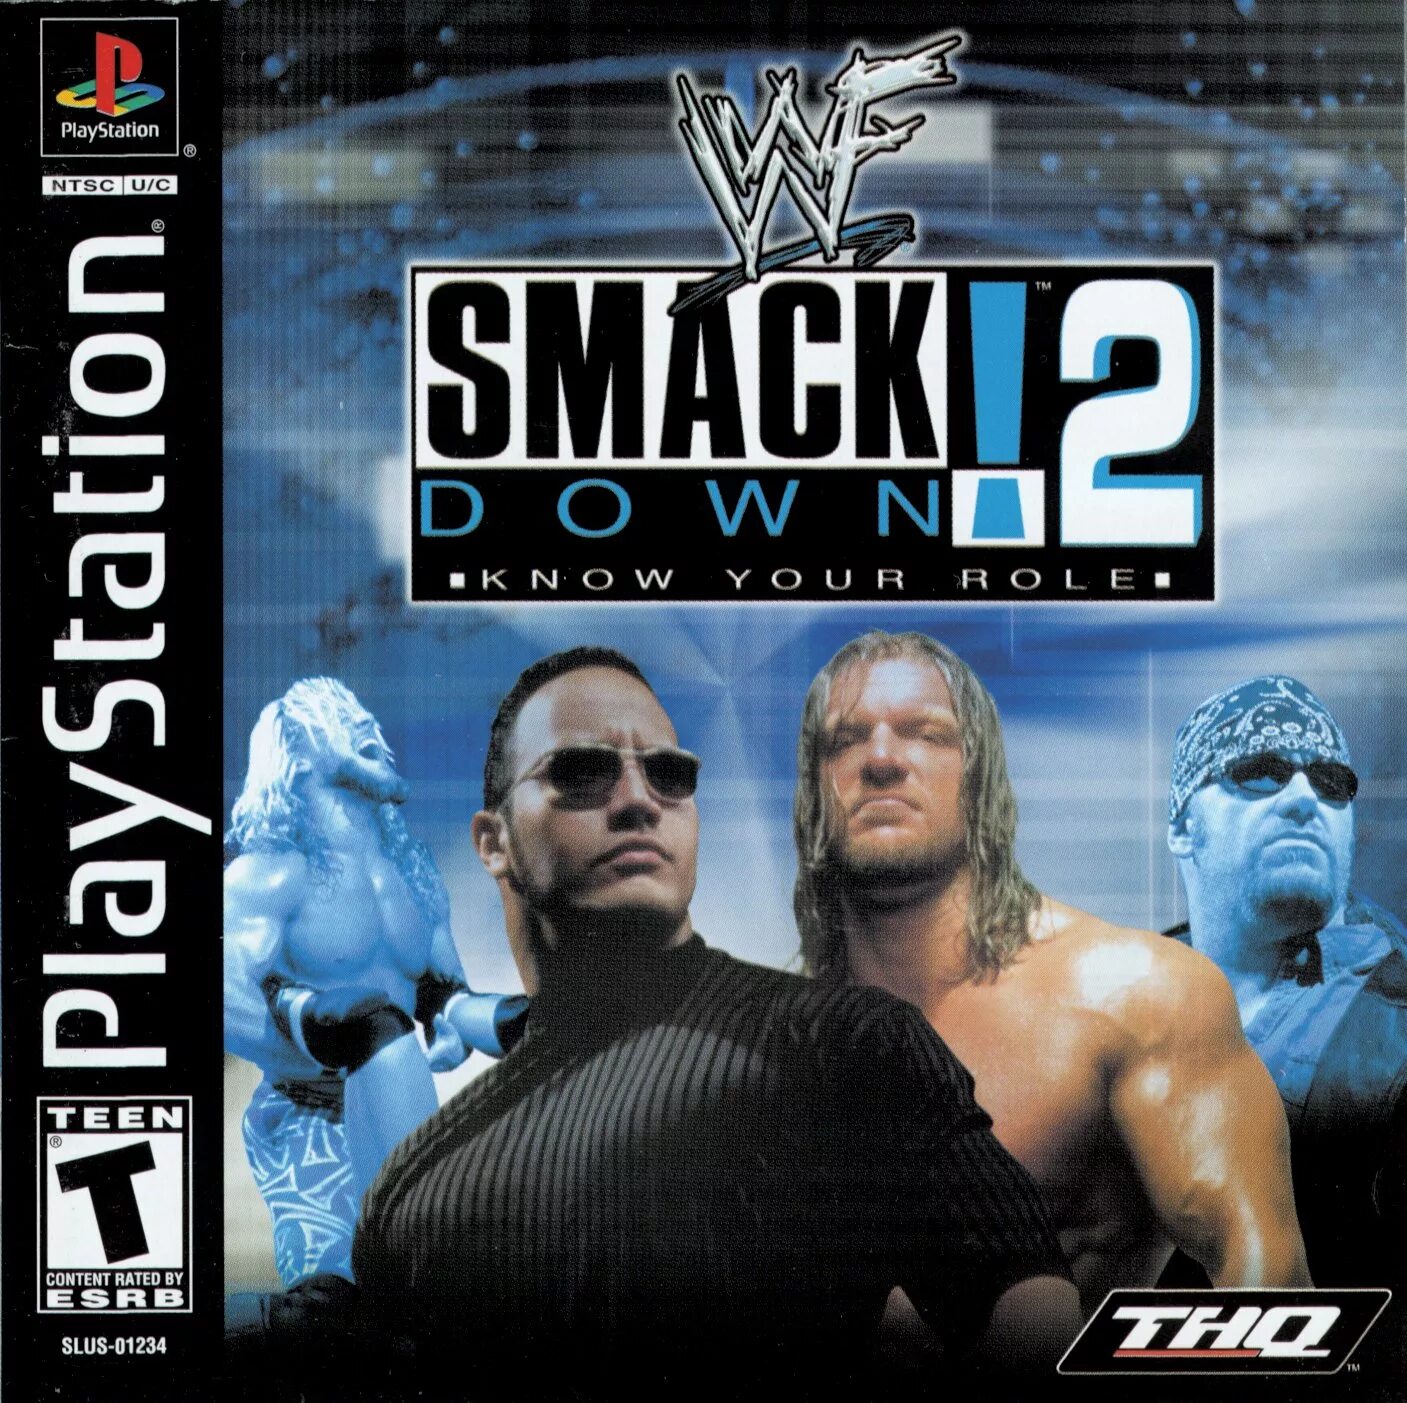 Smack down. Реслинг на сони плейстейшен 1. Sony PLAYSTATION 1 WWF SMACKDOWN 2. WWE SMACKDOWN 2 ps1. Реслинг сени плейстейшн 1.